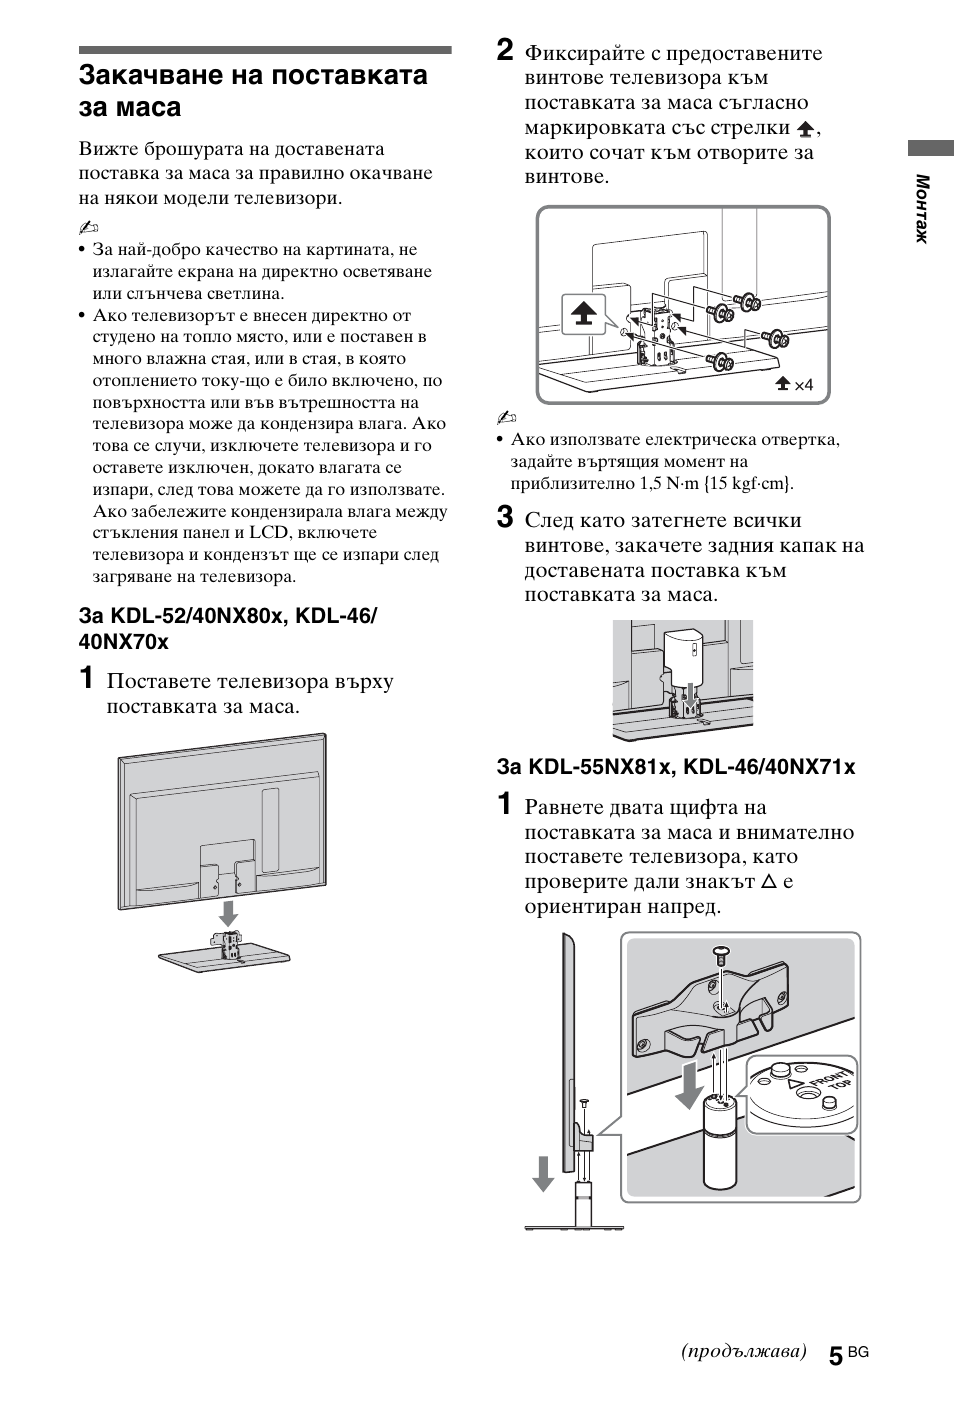 Монтаж, Закачване на поставката за маса | Sony KDL-40NX800 Benutzerhandbuch | Seite 433 / 456